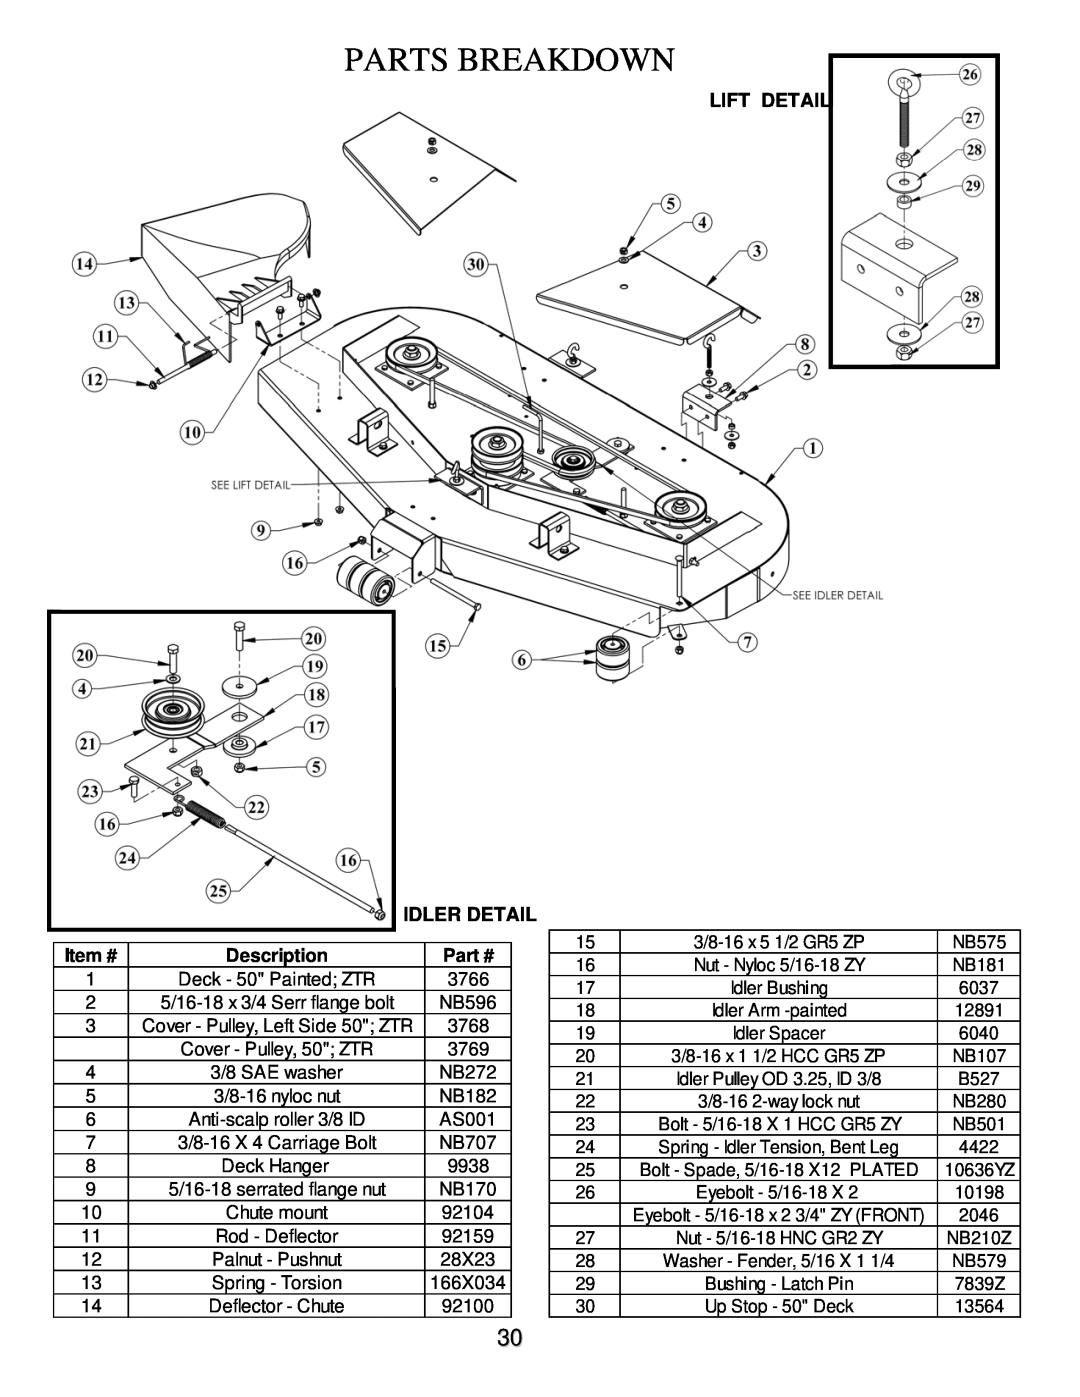 Swisher ZT2350A manual Parts Breakdown, Idler Detail, Lift Detail, Item #, Description 